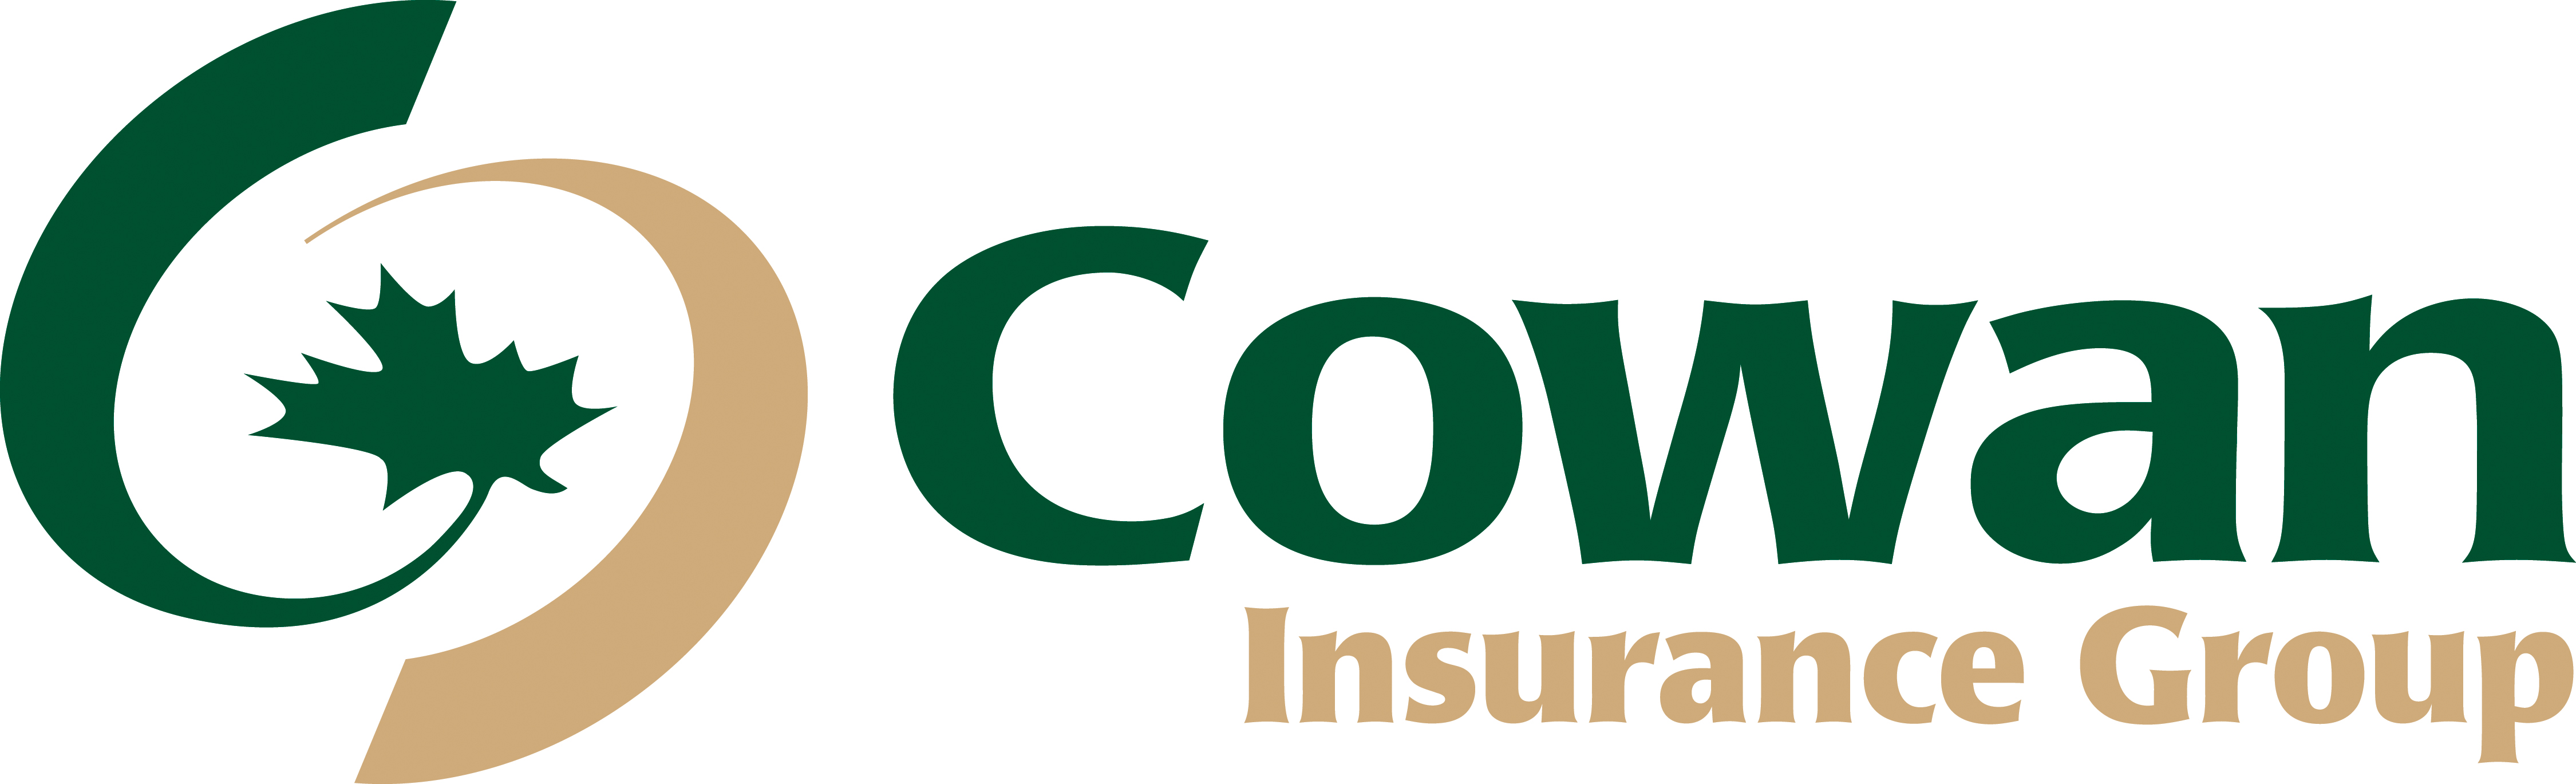 Cowan Insurance